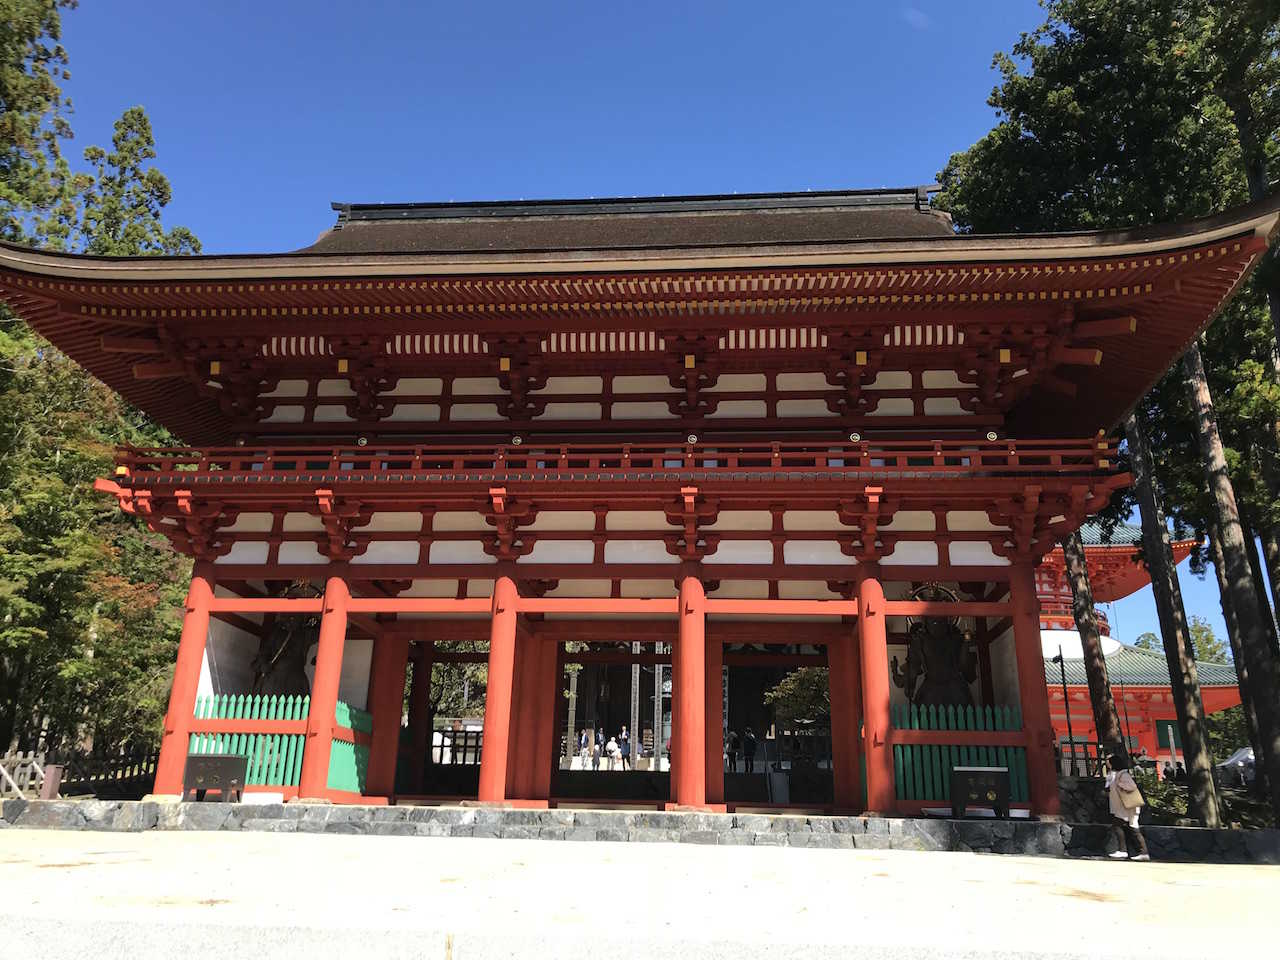 Koyasan’s byport Daimon Gate